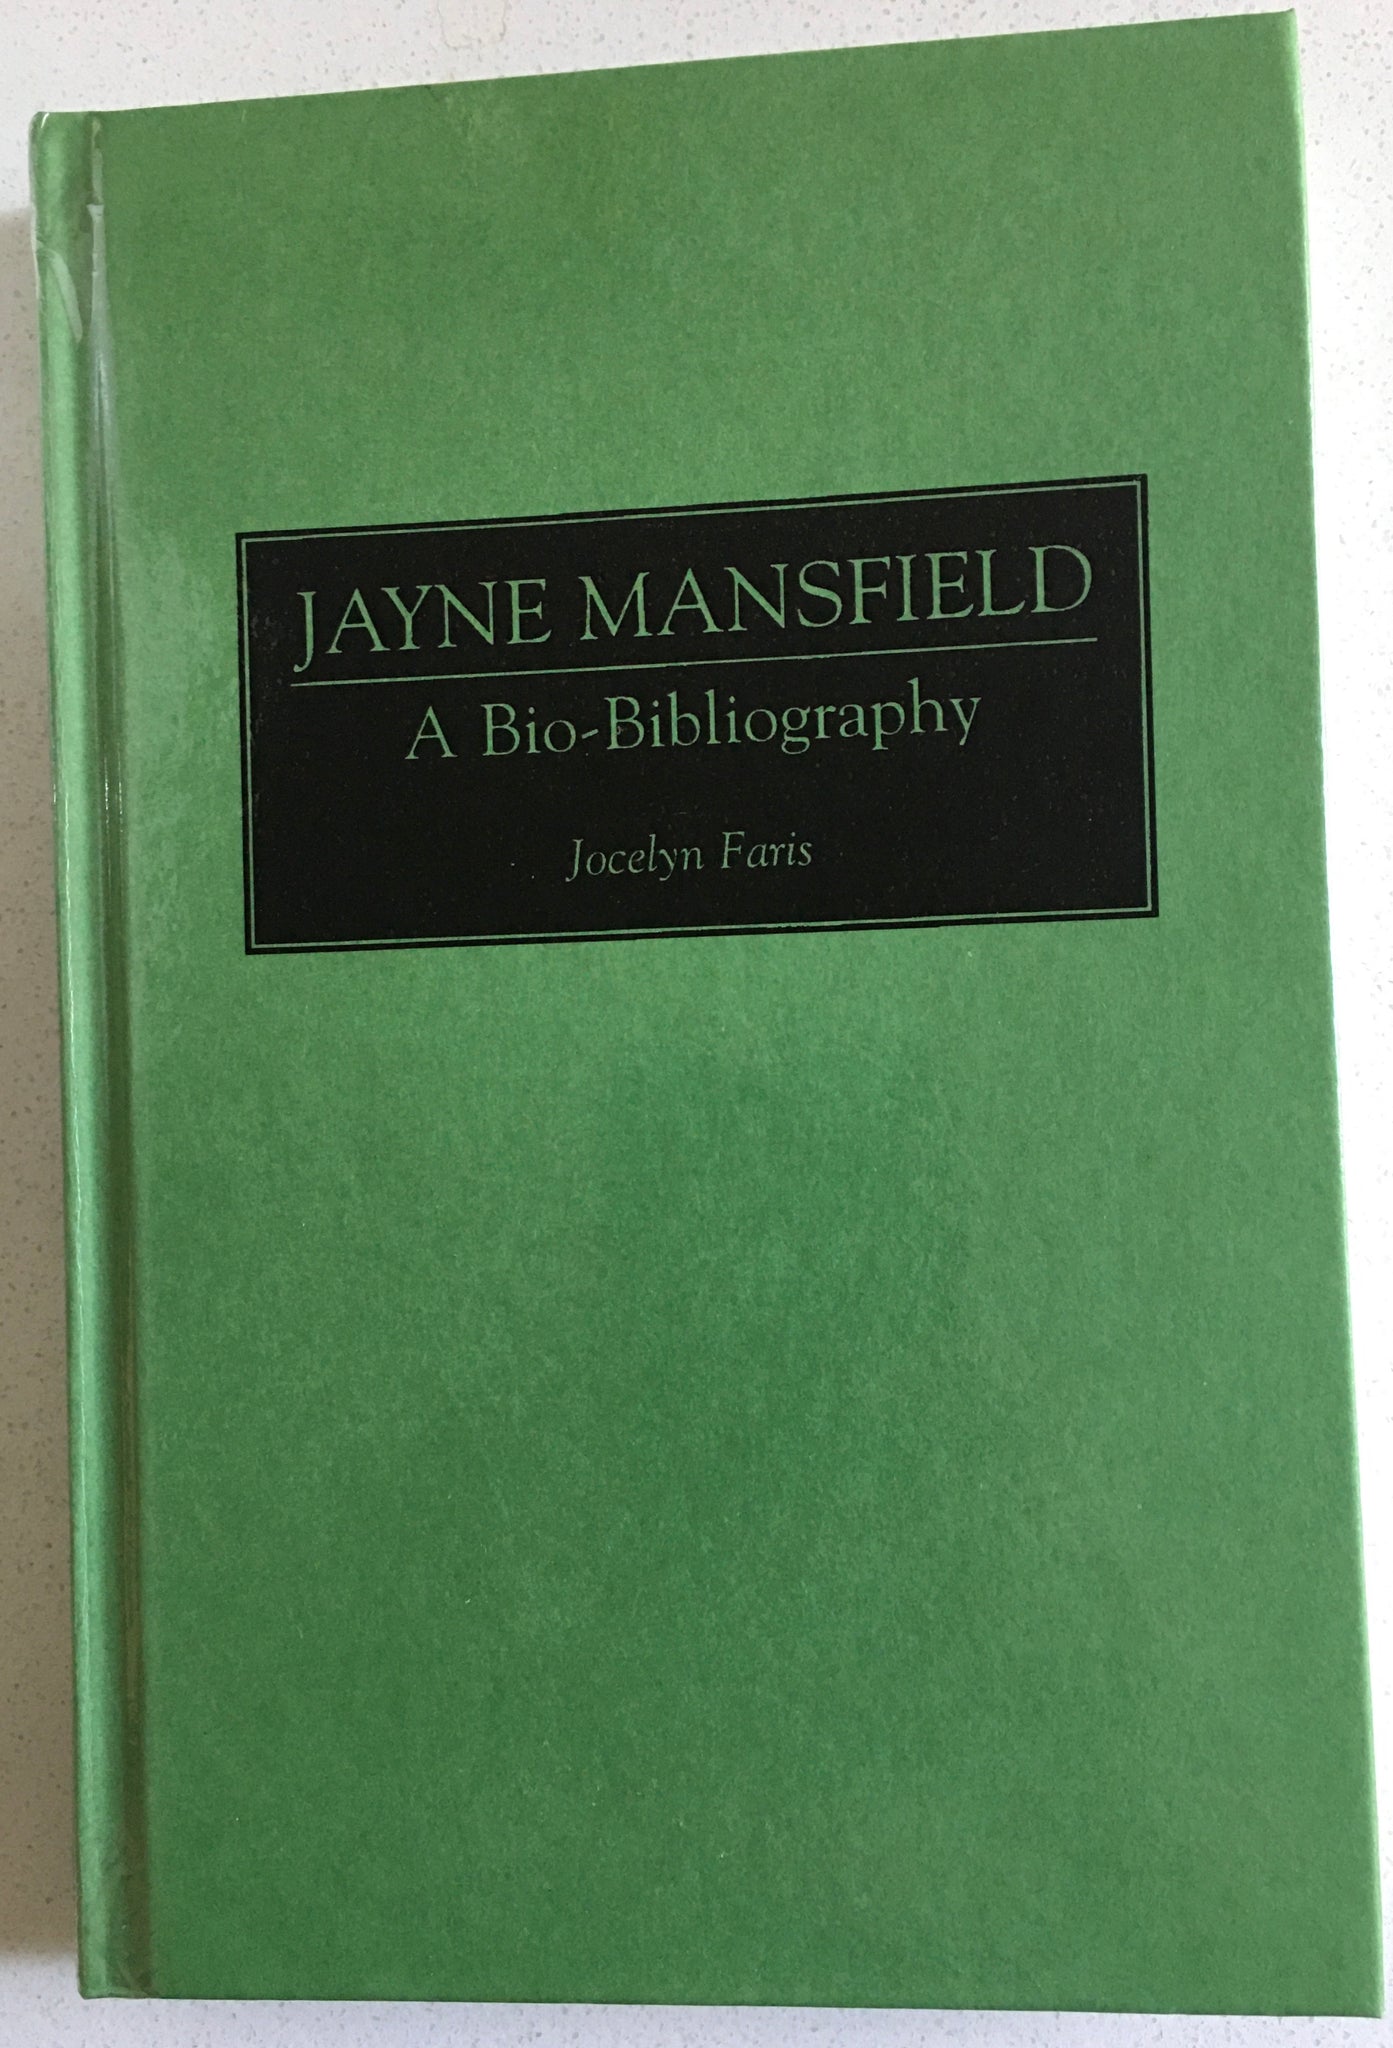 Jayne Mansfield: A Bio-bibliography